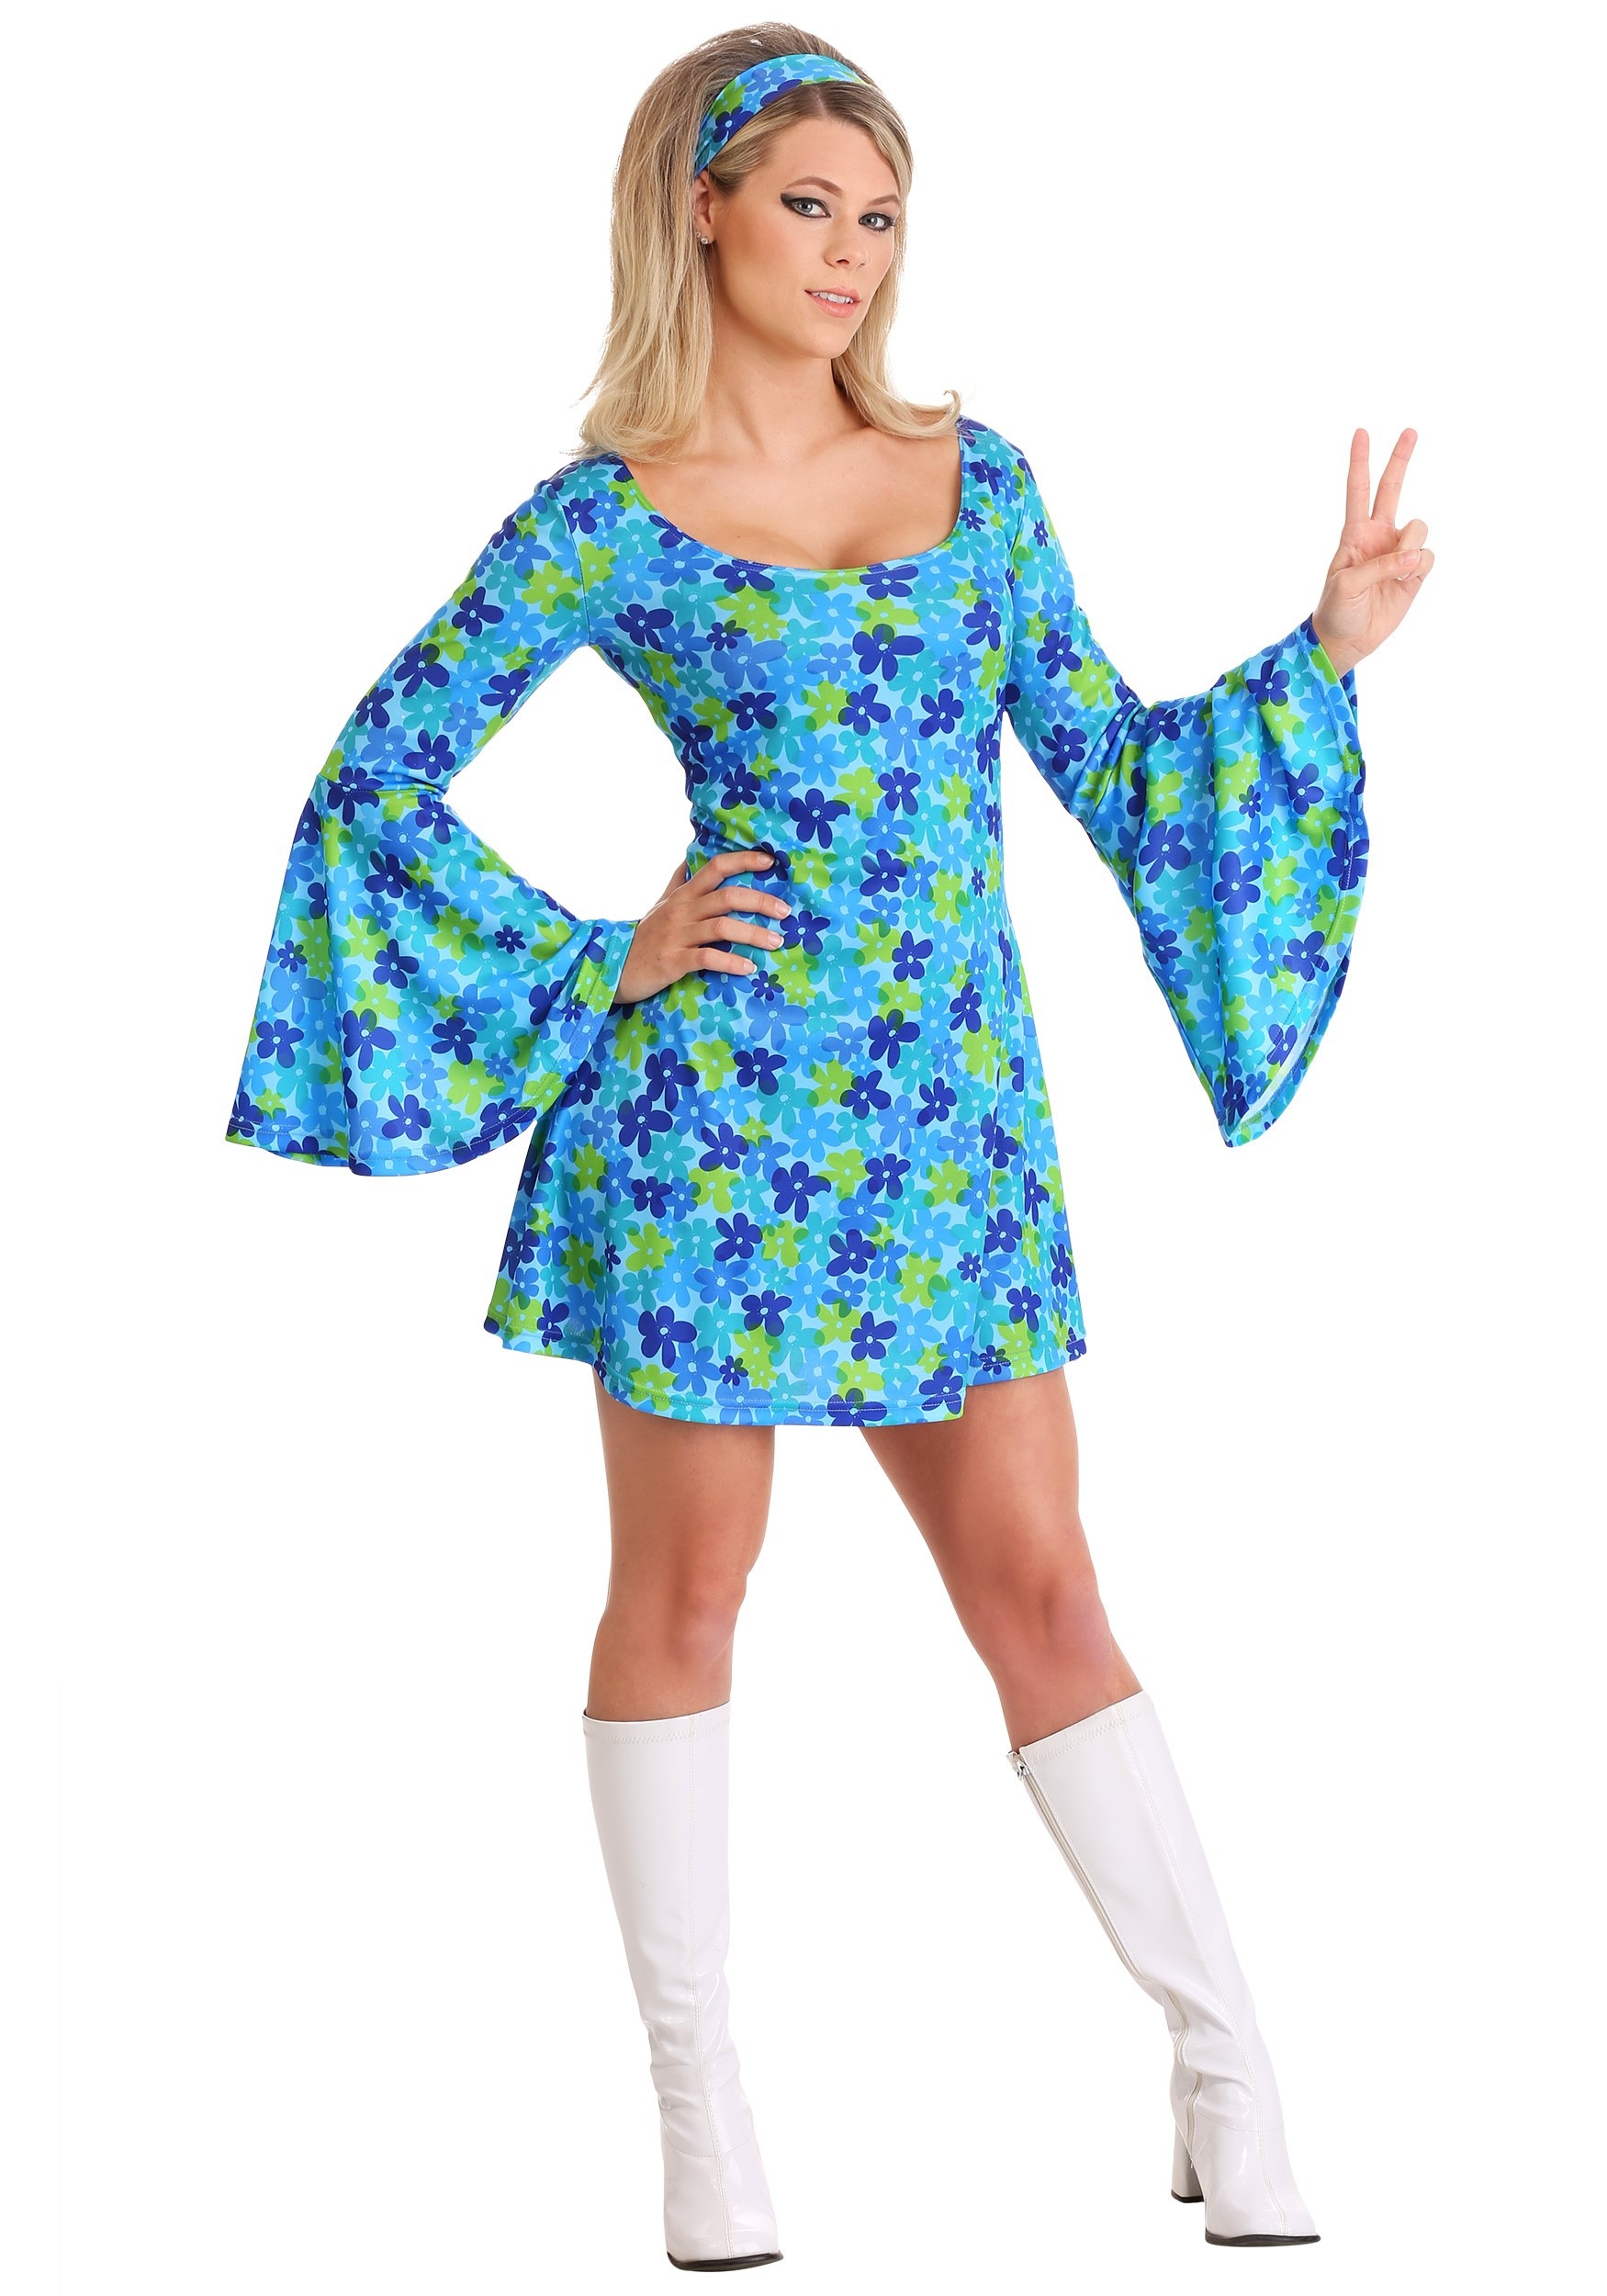 Wild Flower 70s Hippie Dress Costume for Women | Hairspray Costume